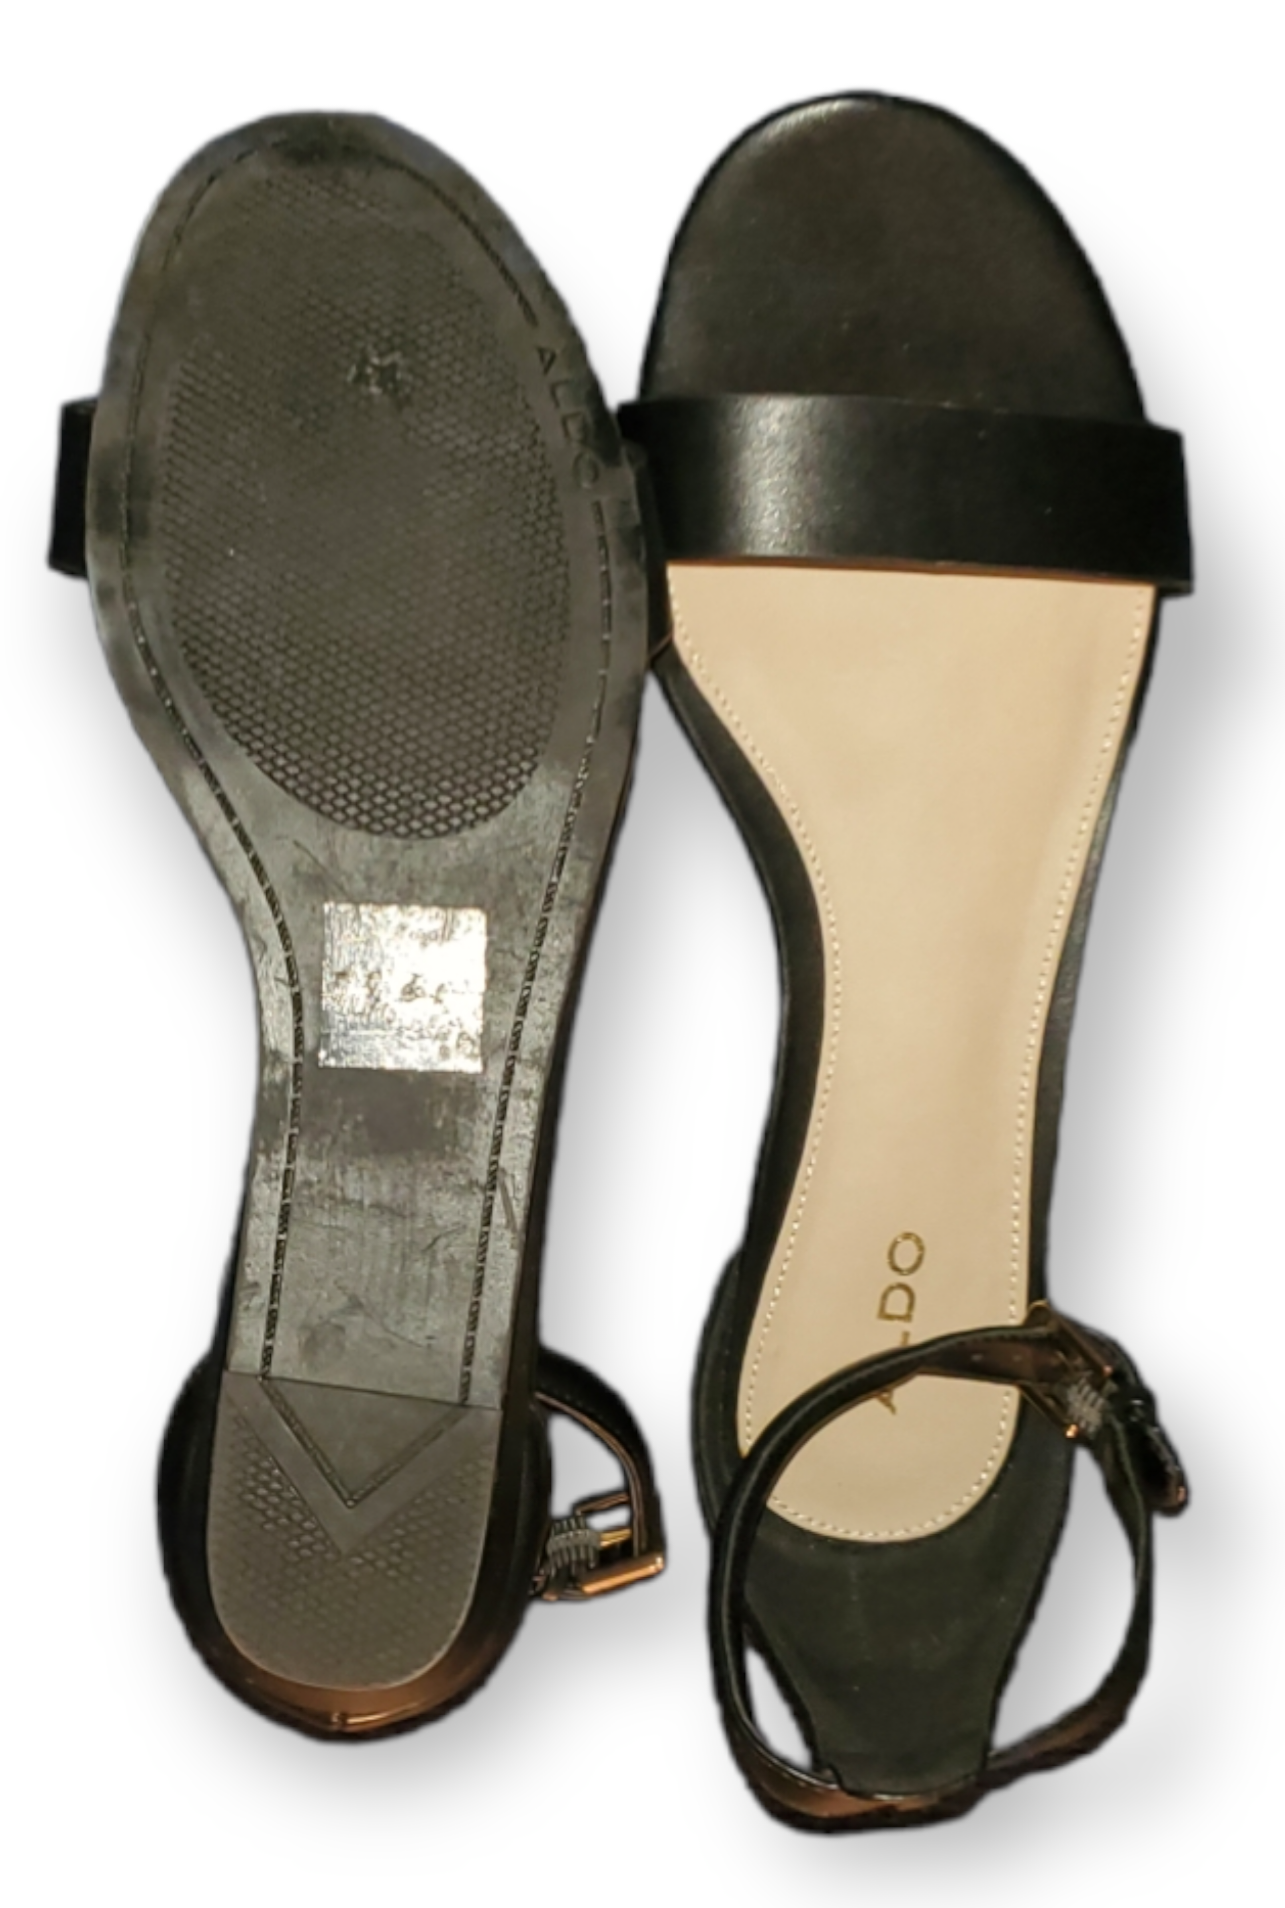 Aldo Black Sandals|Like New!